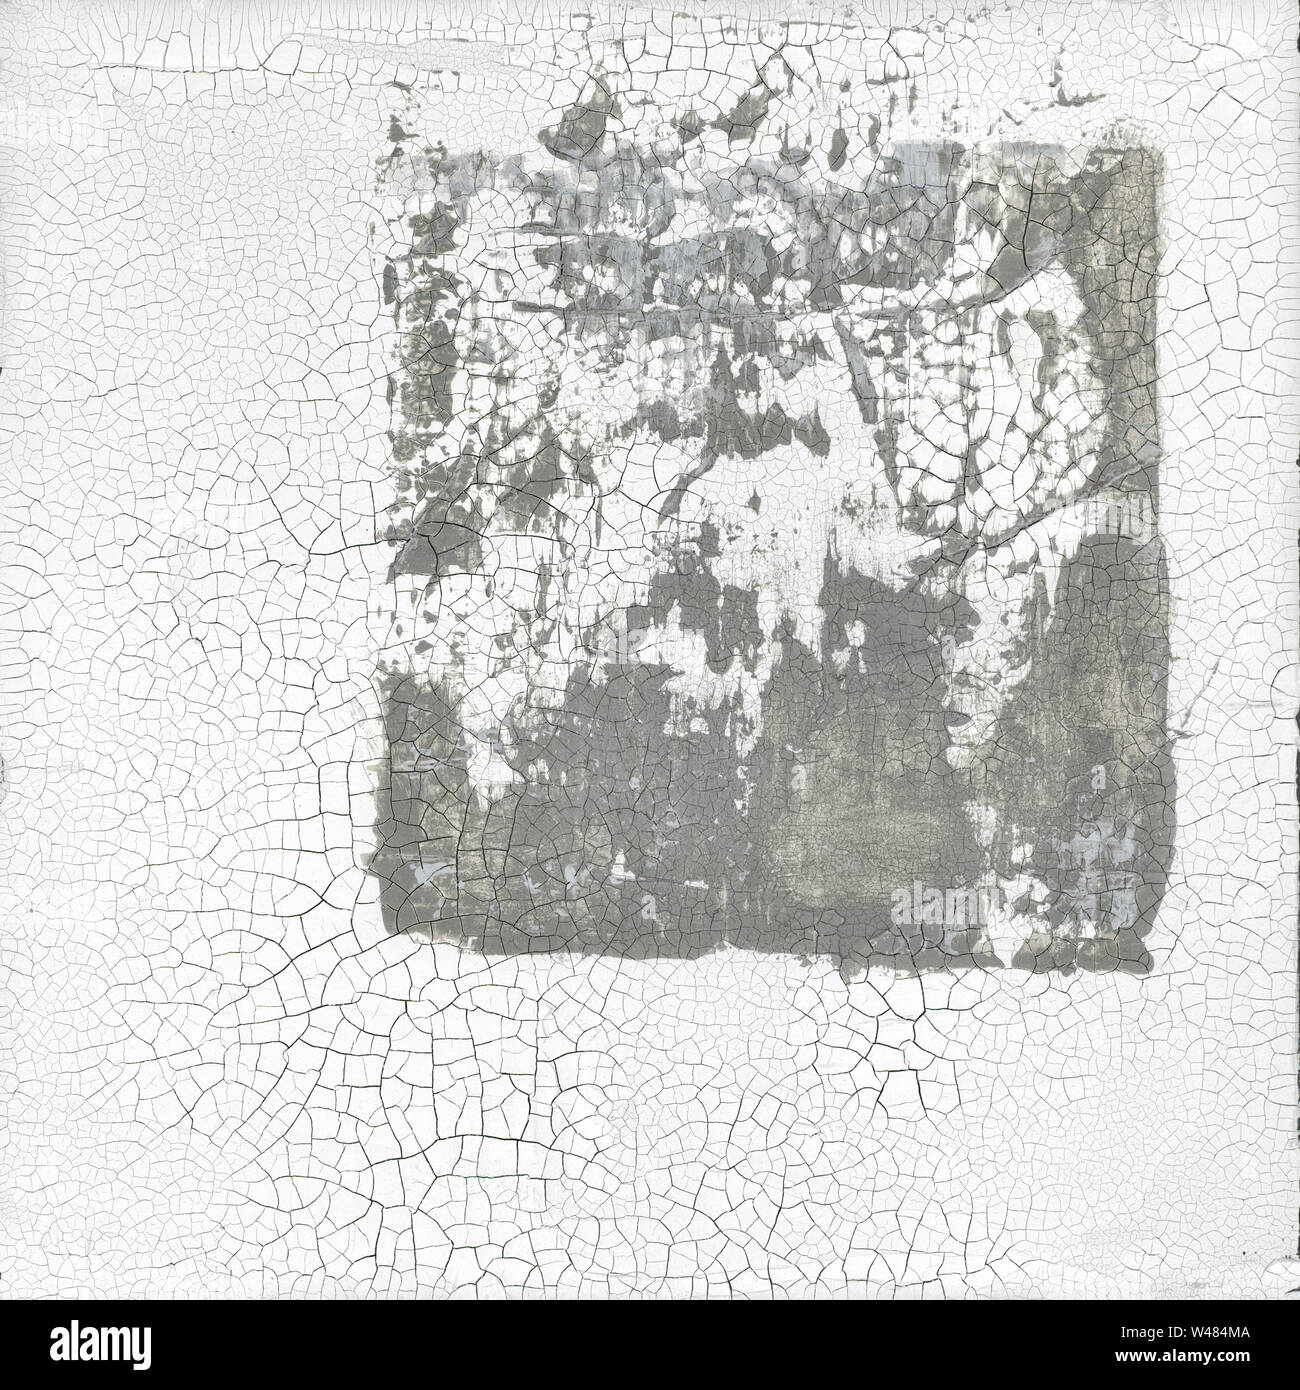 Zen minimalista fragmentos de pintura blanca de fondo agrietado con tonos grises neutros. Ilustración simbólica abstracta cuadrada. Foto de stock